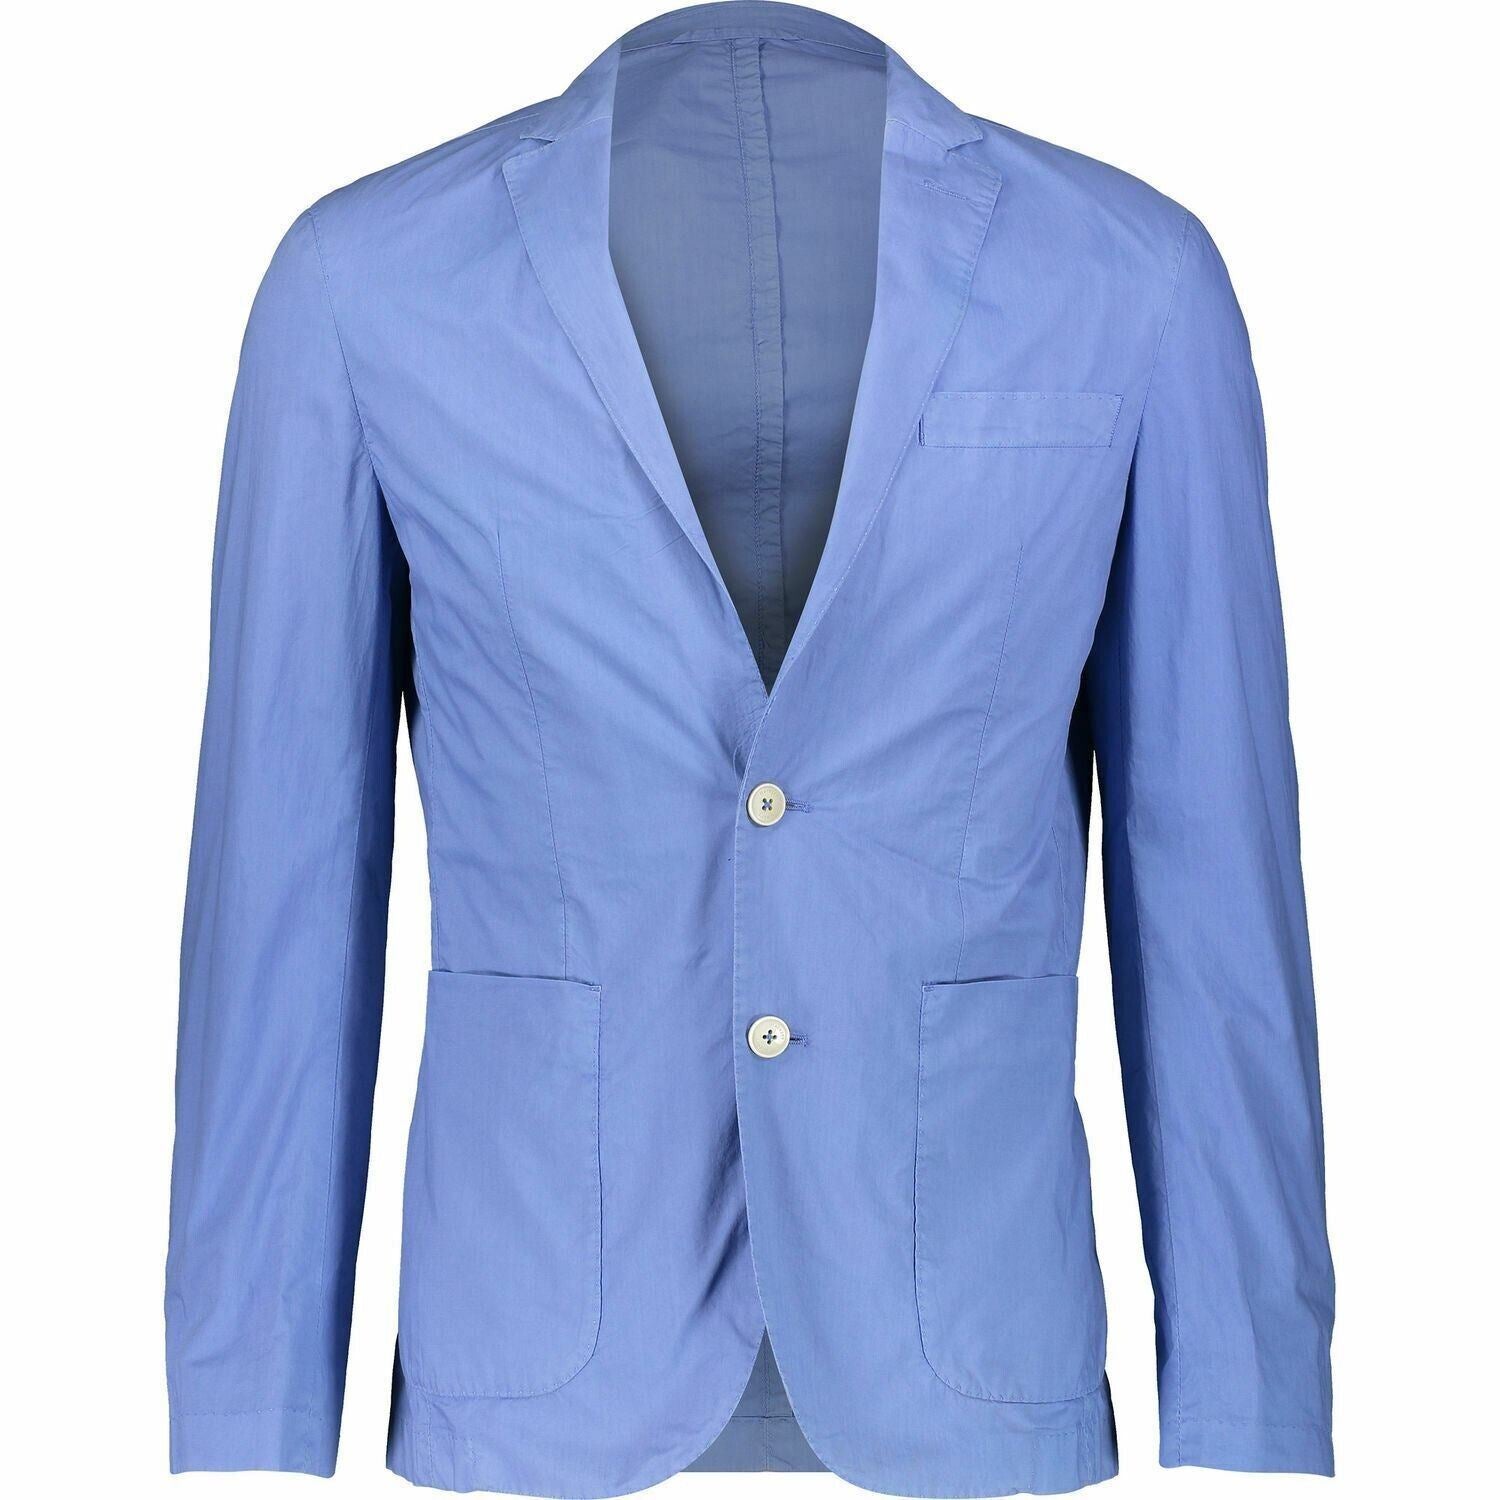 HACKETT Men's Blue Lightweight Poplin Cotton Blazer Jacket, size 40 R